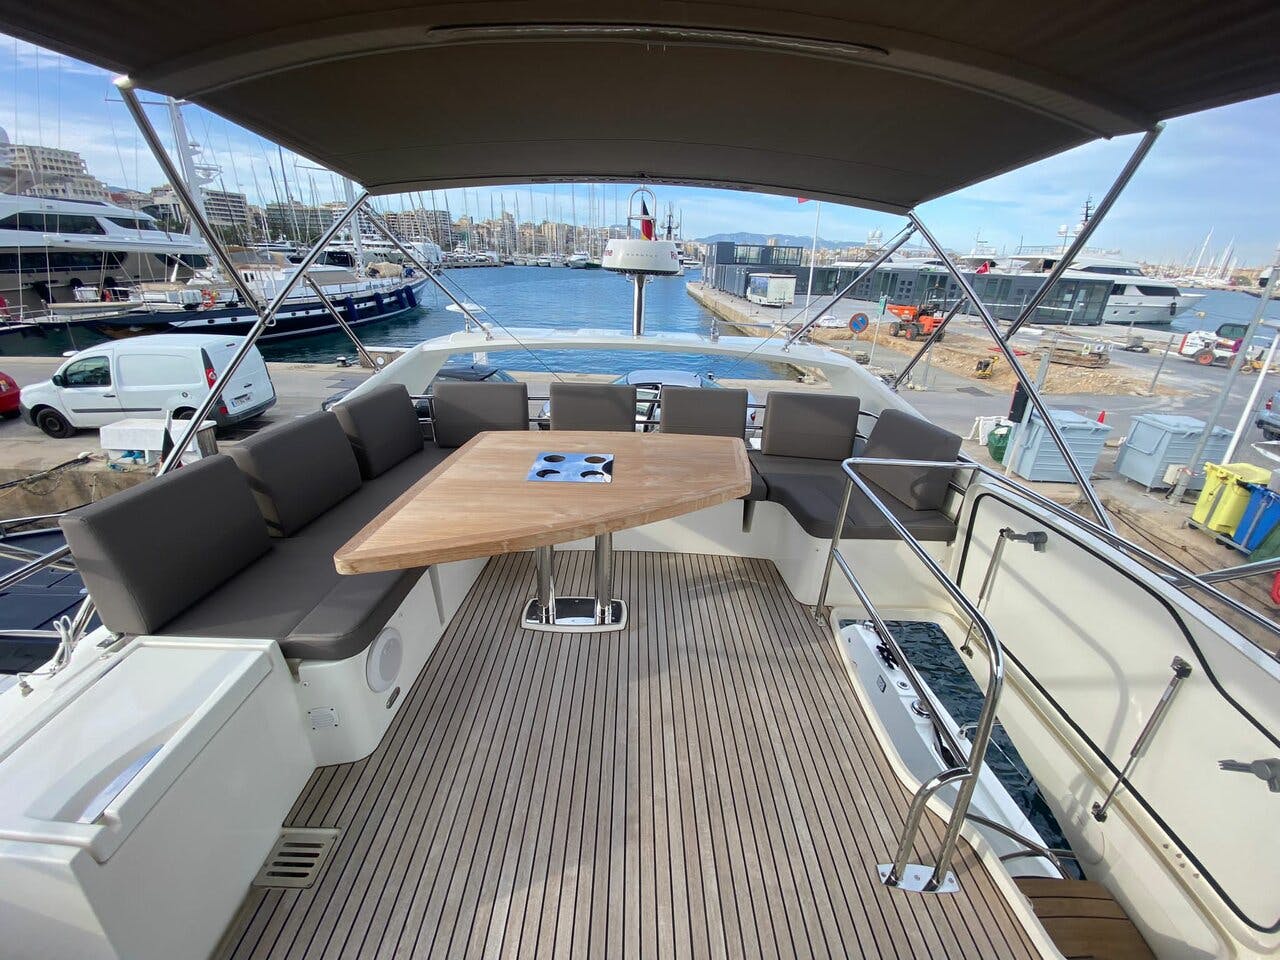 Book Prestige 560F Motor yacht for bareboat charter in Palma de Mallorca, Balearic Islands, Spain with TripYacht!, picture 9